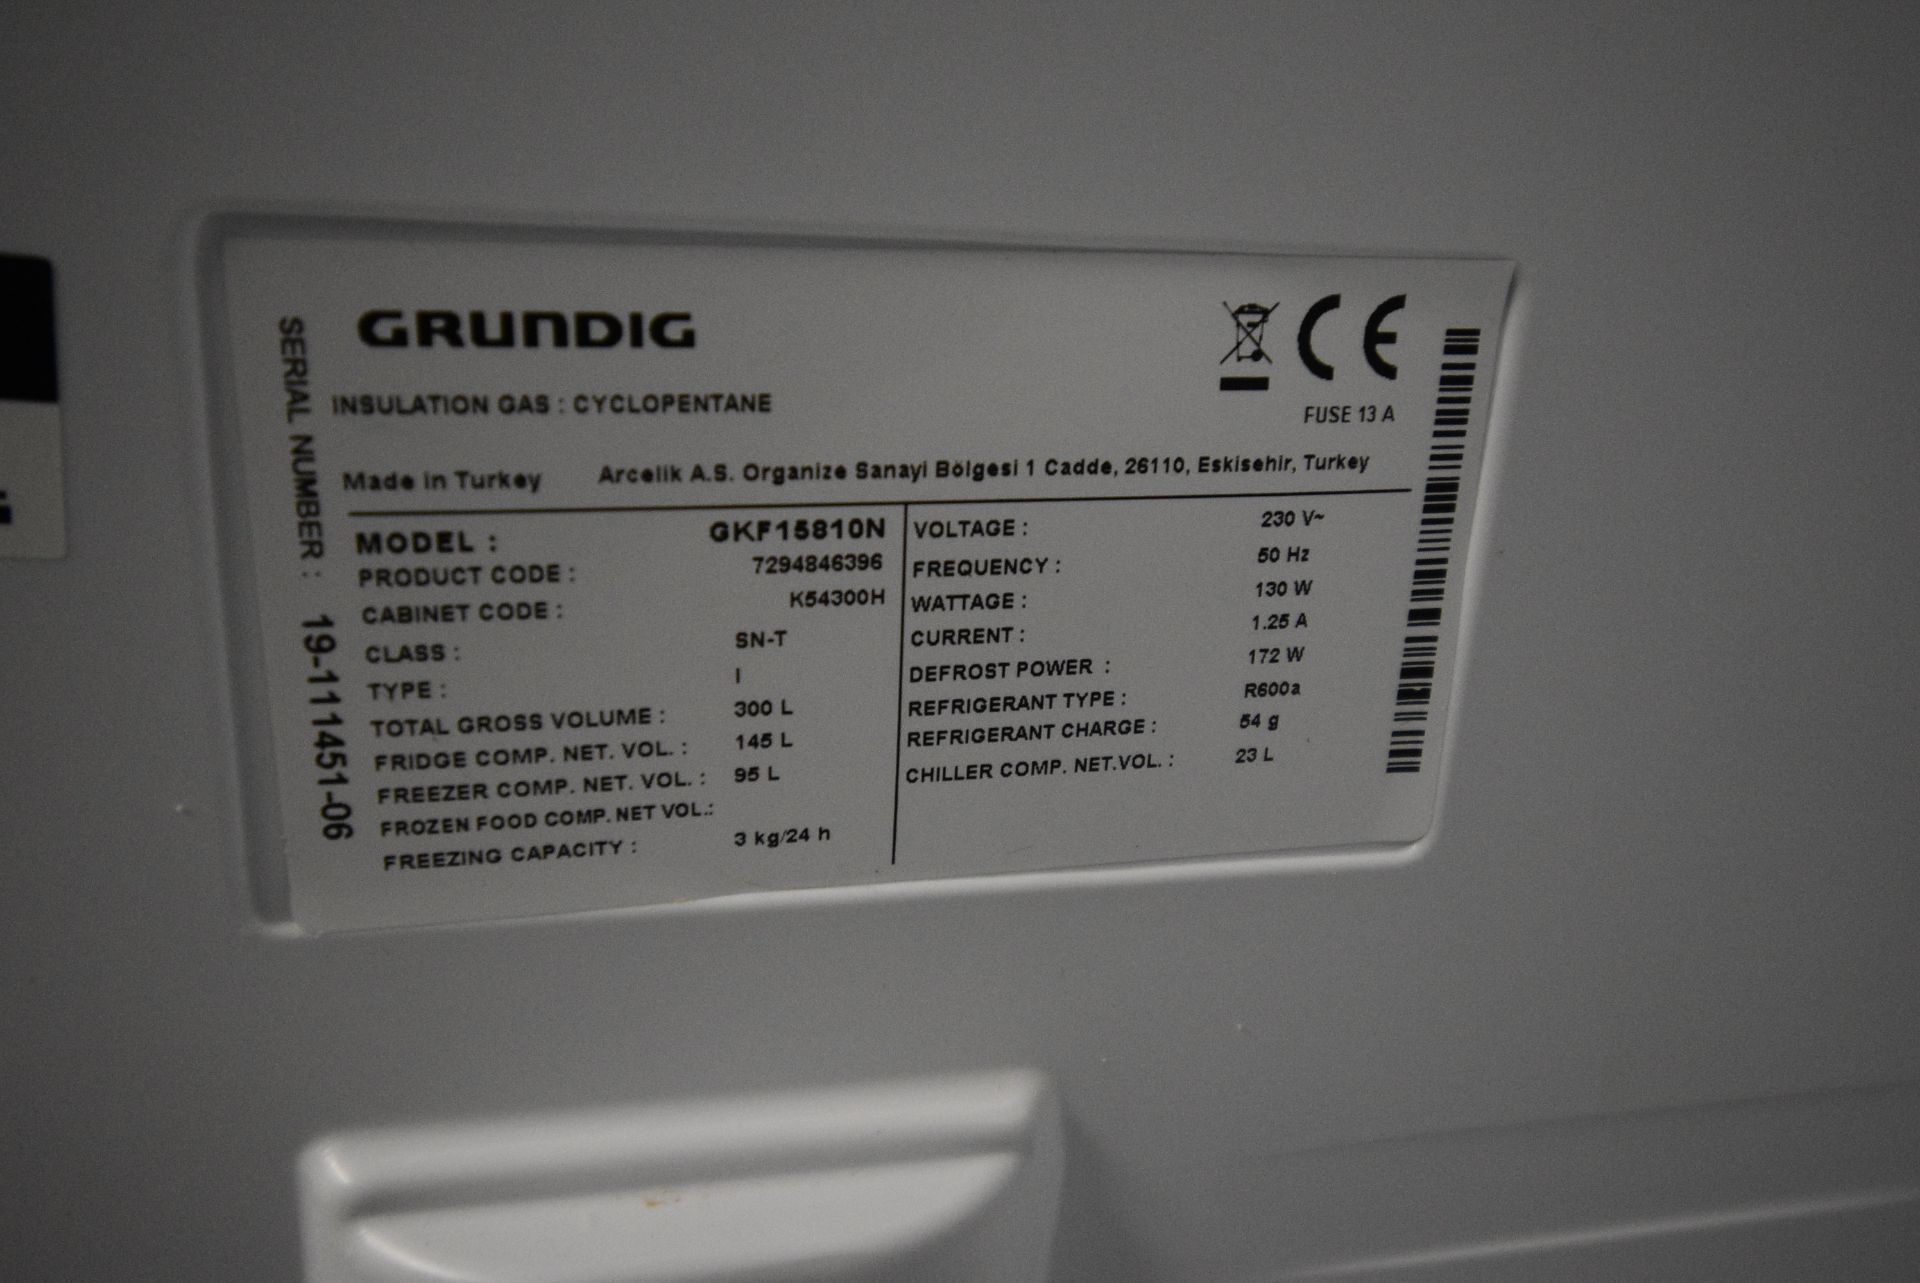 Grundig GKF15810N Upright Refrigerator - Image 3 of 4